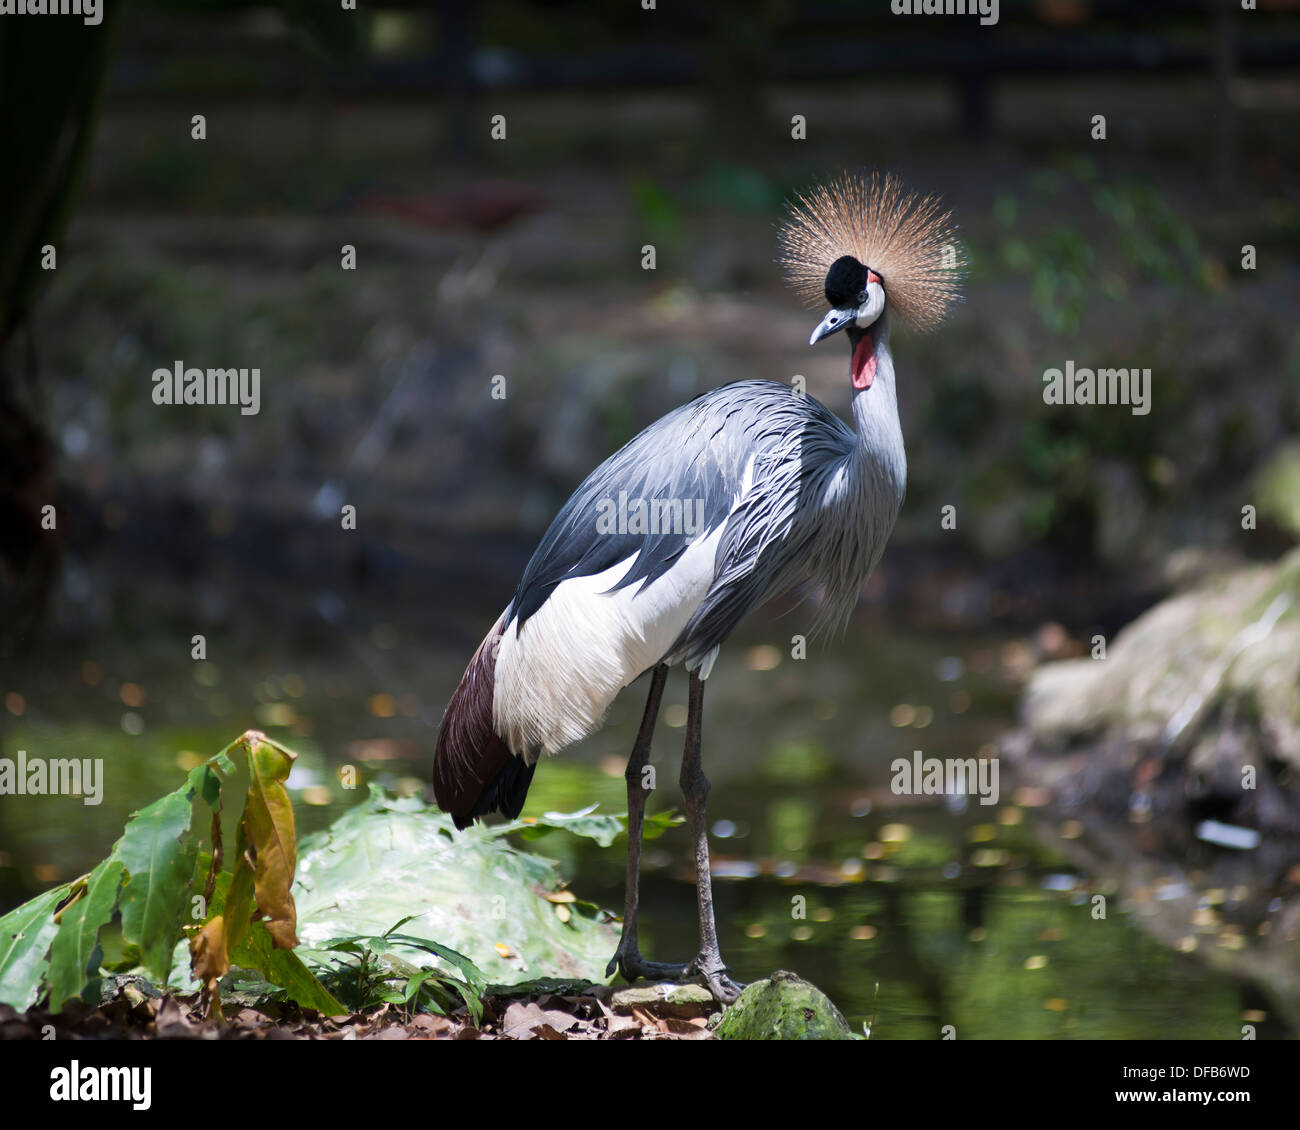 Crowned crane, Labuan bird park Stock Photo